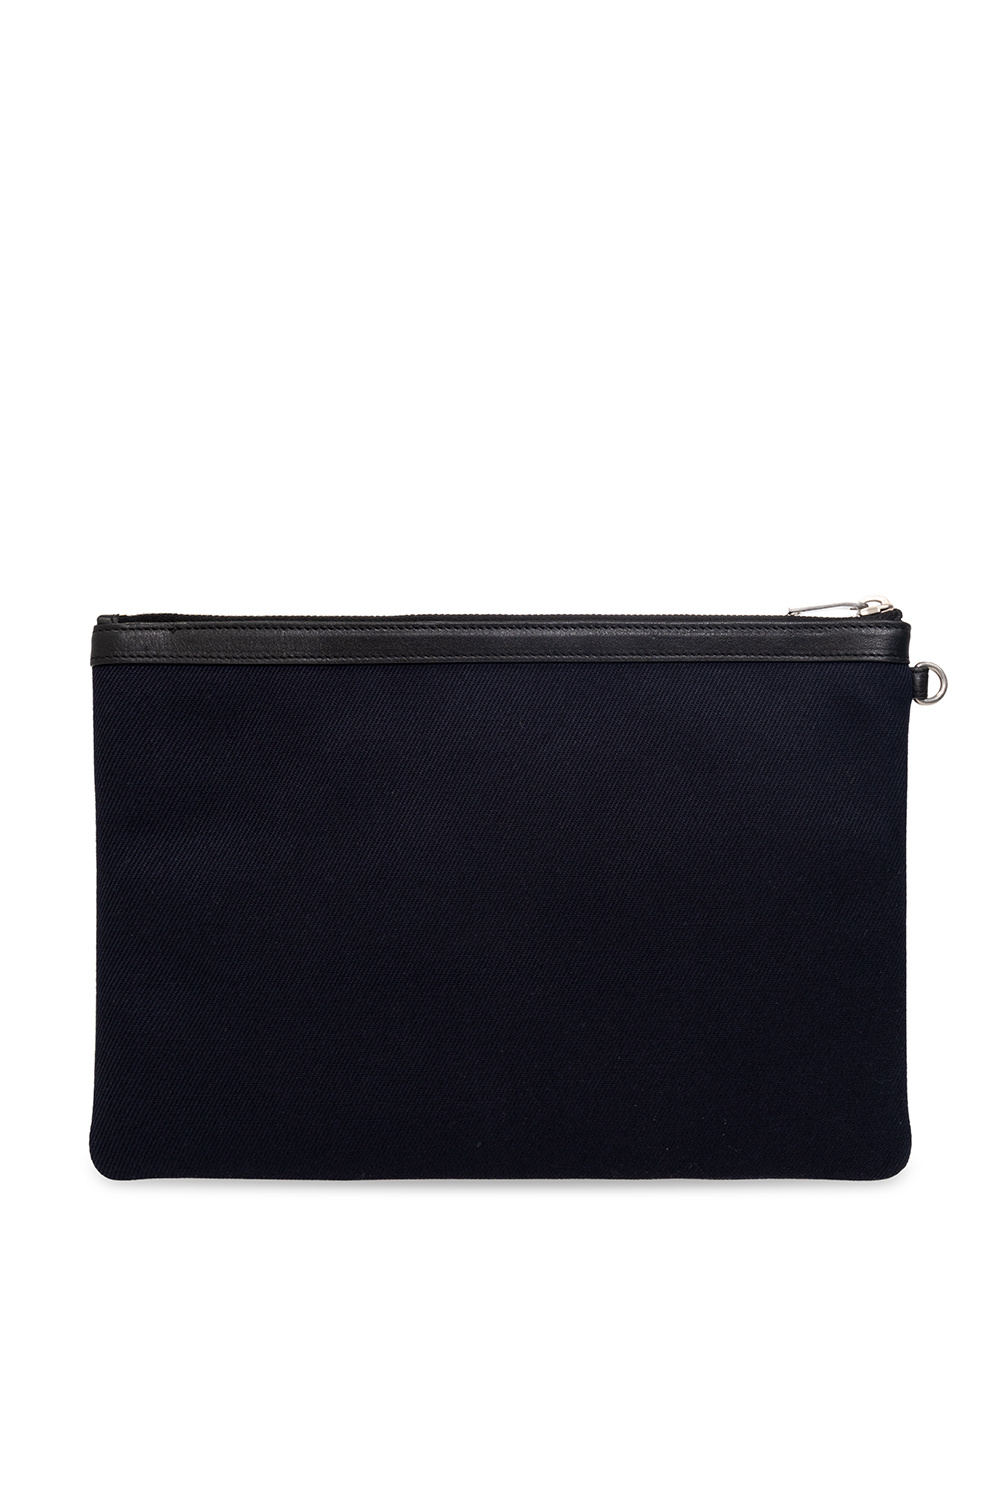 Saint Laurent ‘Rive Gauche’ handbag